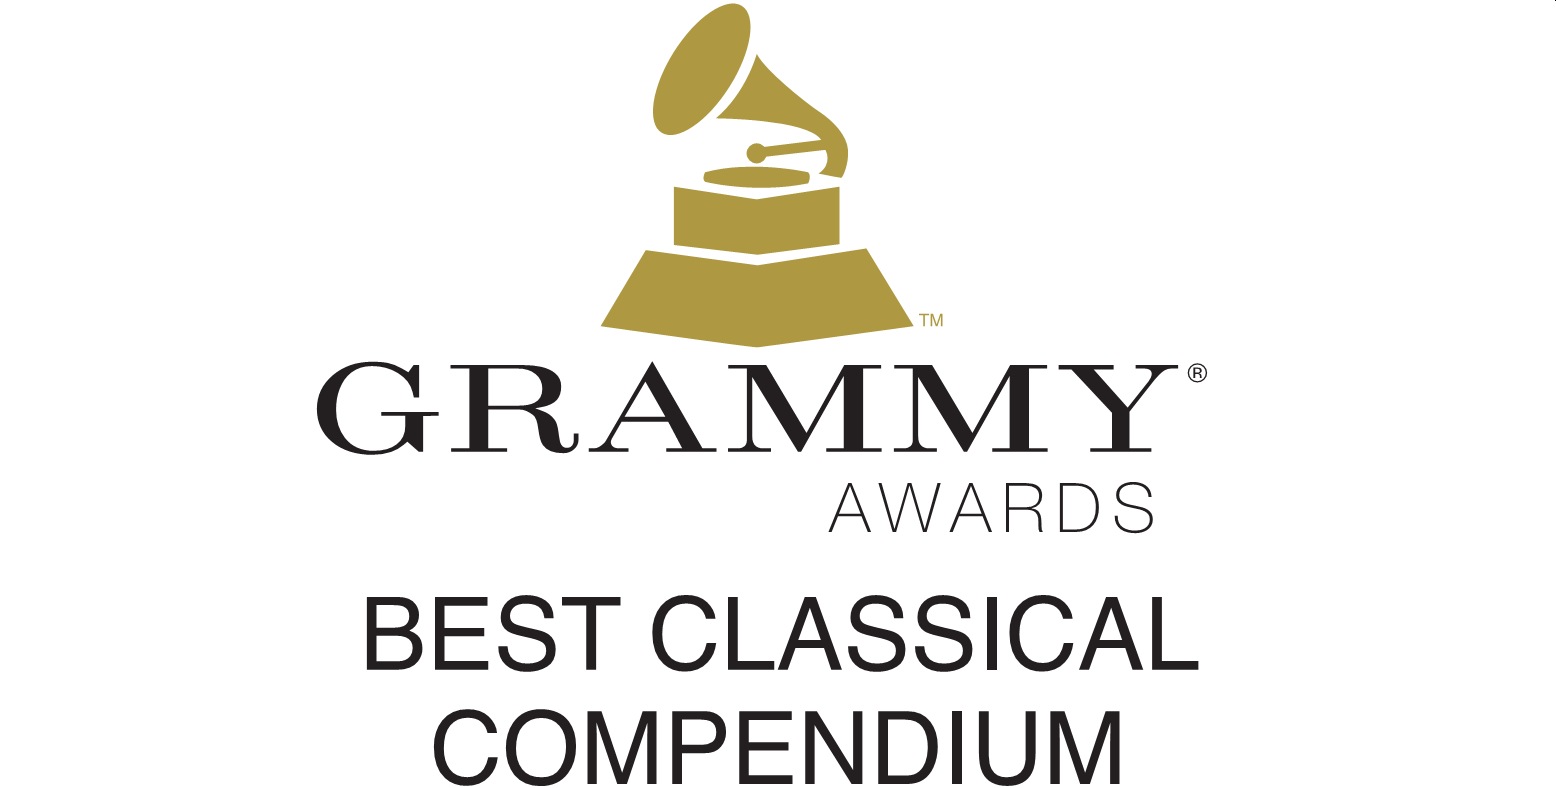 Grammy Award: 'Best Classical Compendium' (2012)